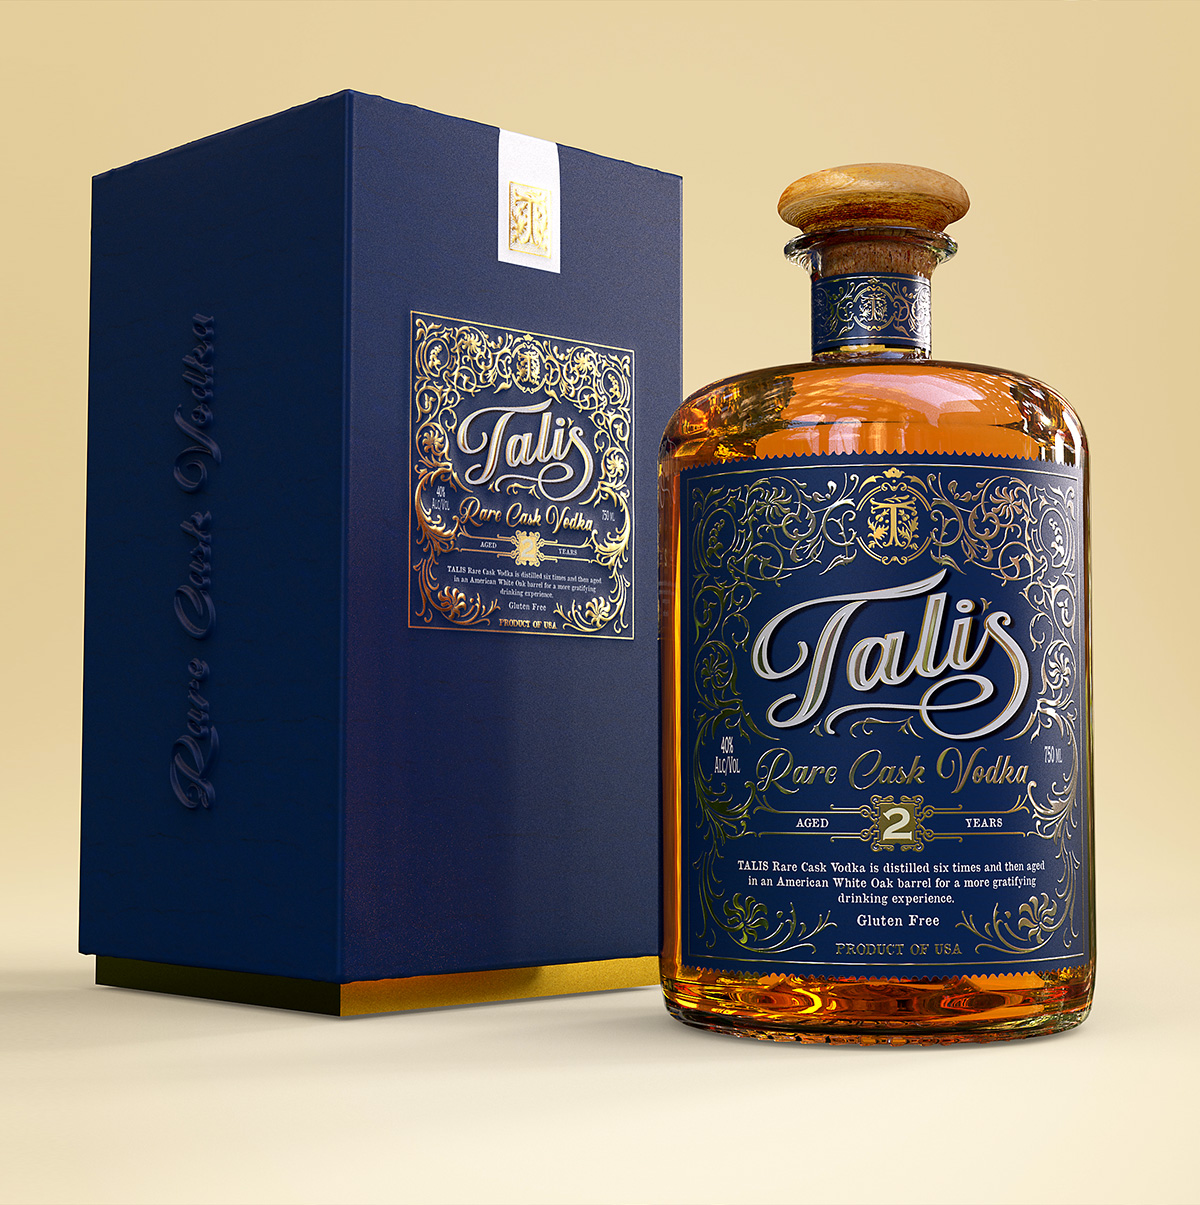 Talis Rare Cask Vodka label